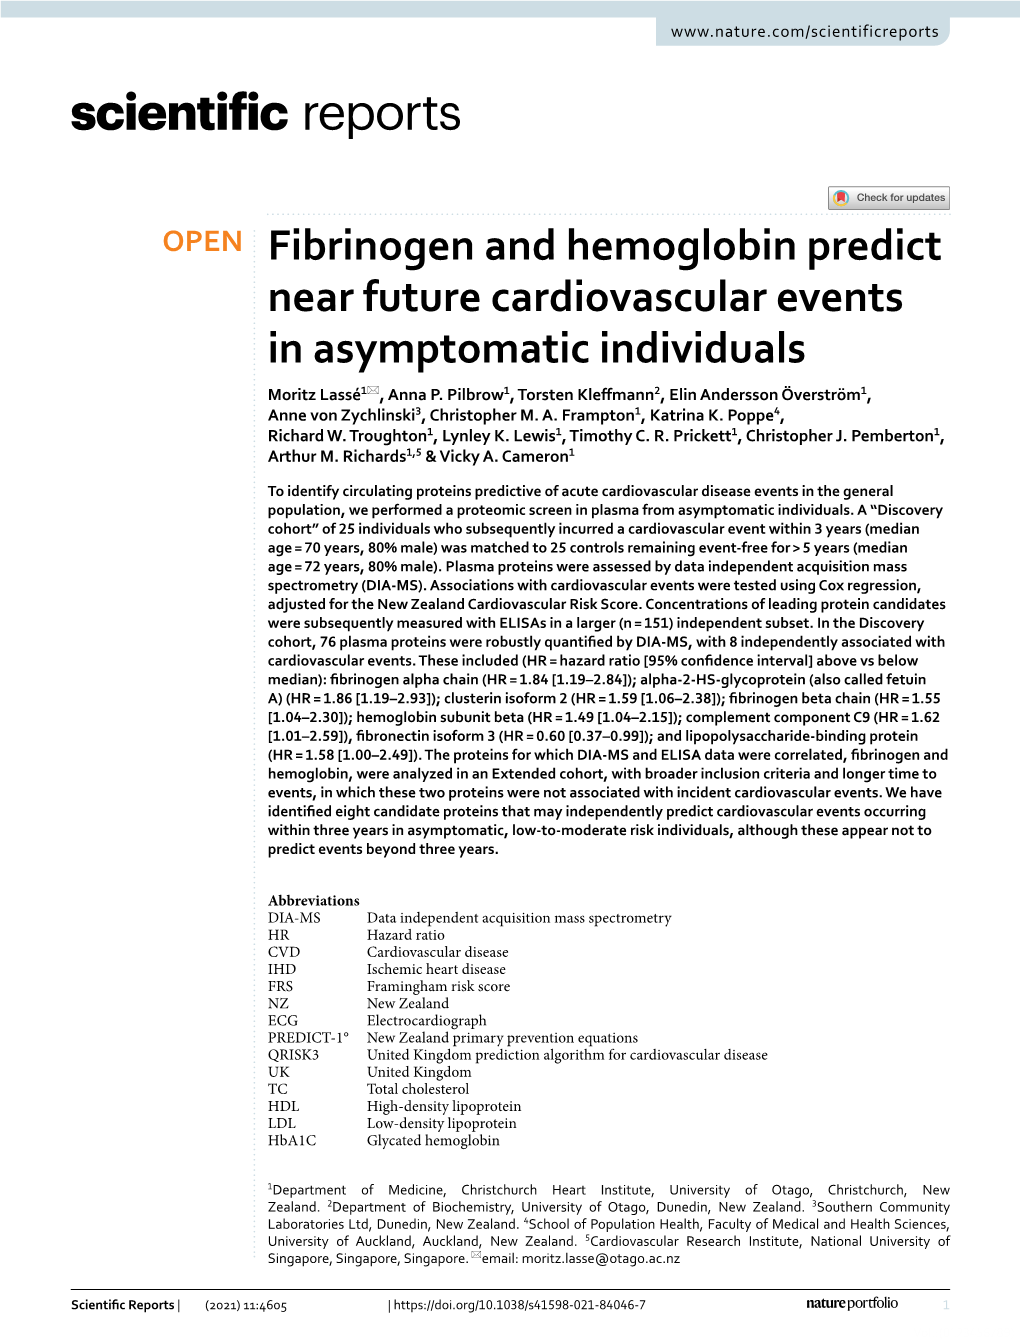 Fibrinogen and Hemoglobin Predict Near Future Cardiovascular Events in Asymptomatic Individuals Moritz Lassé1*, Anna P